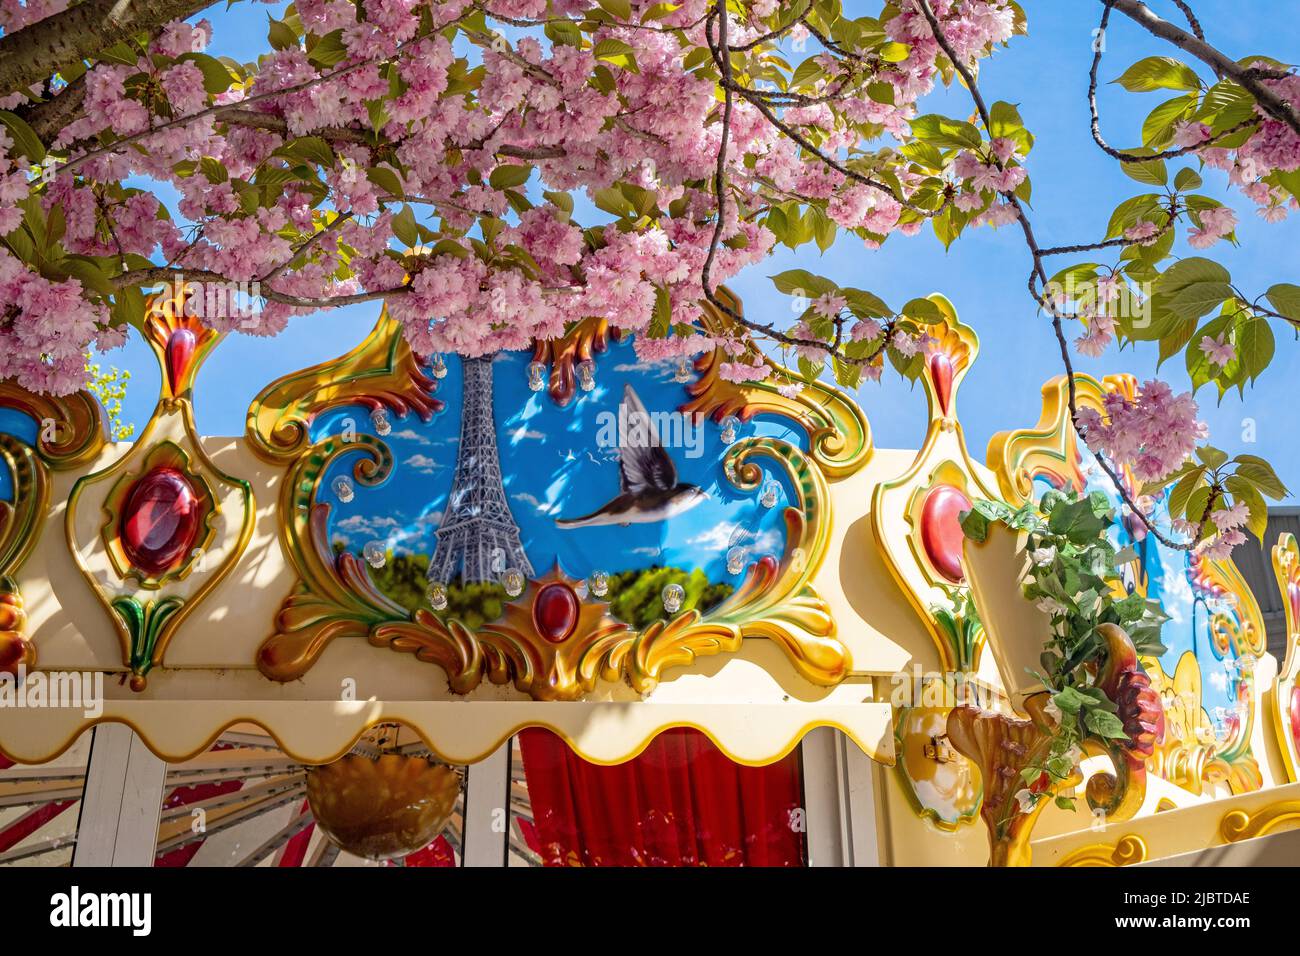 France, Paris, Vivaldi alley, 12th, cherry blossoms, carousel for children Stock Photo